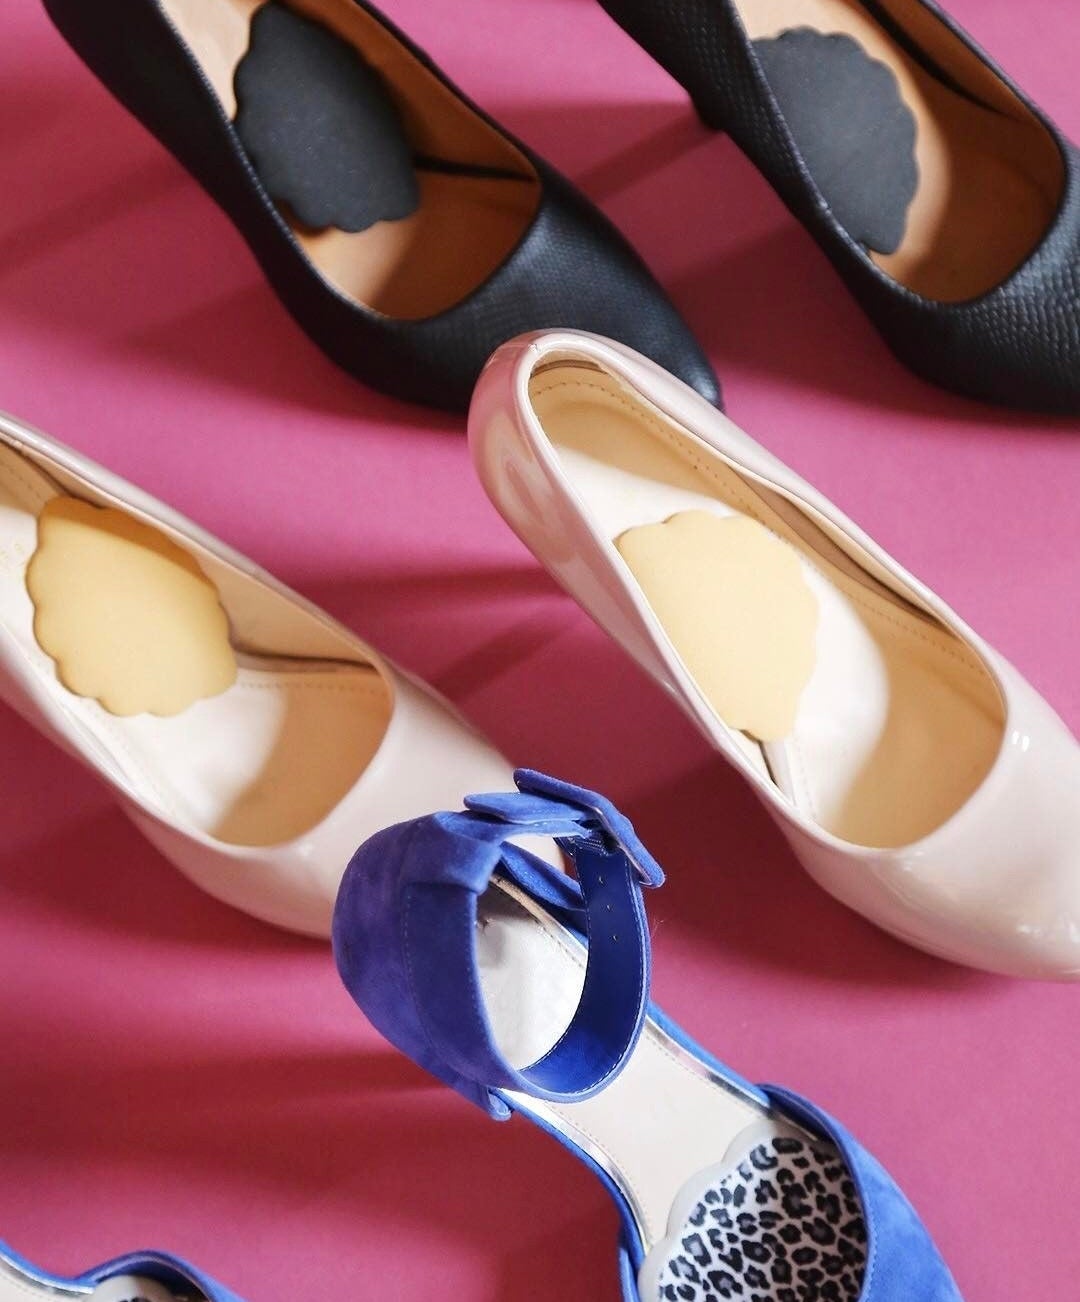 Foot Petals in several pairs of high heels